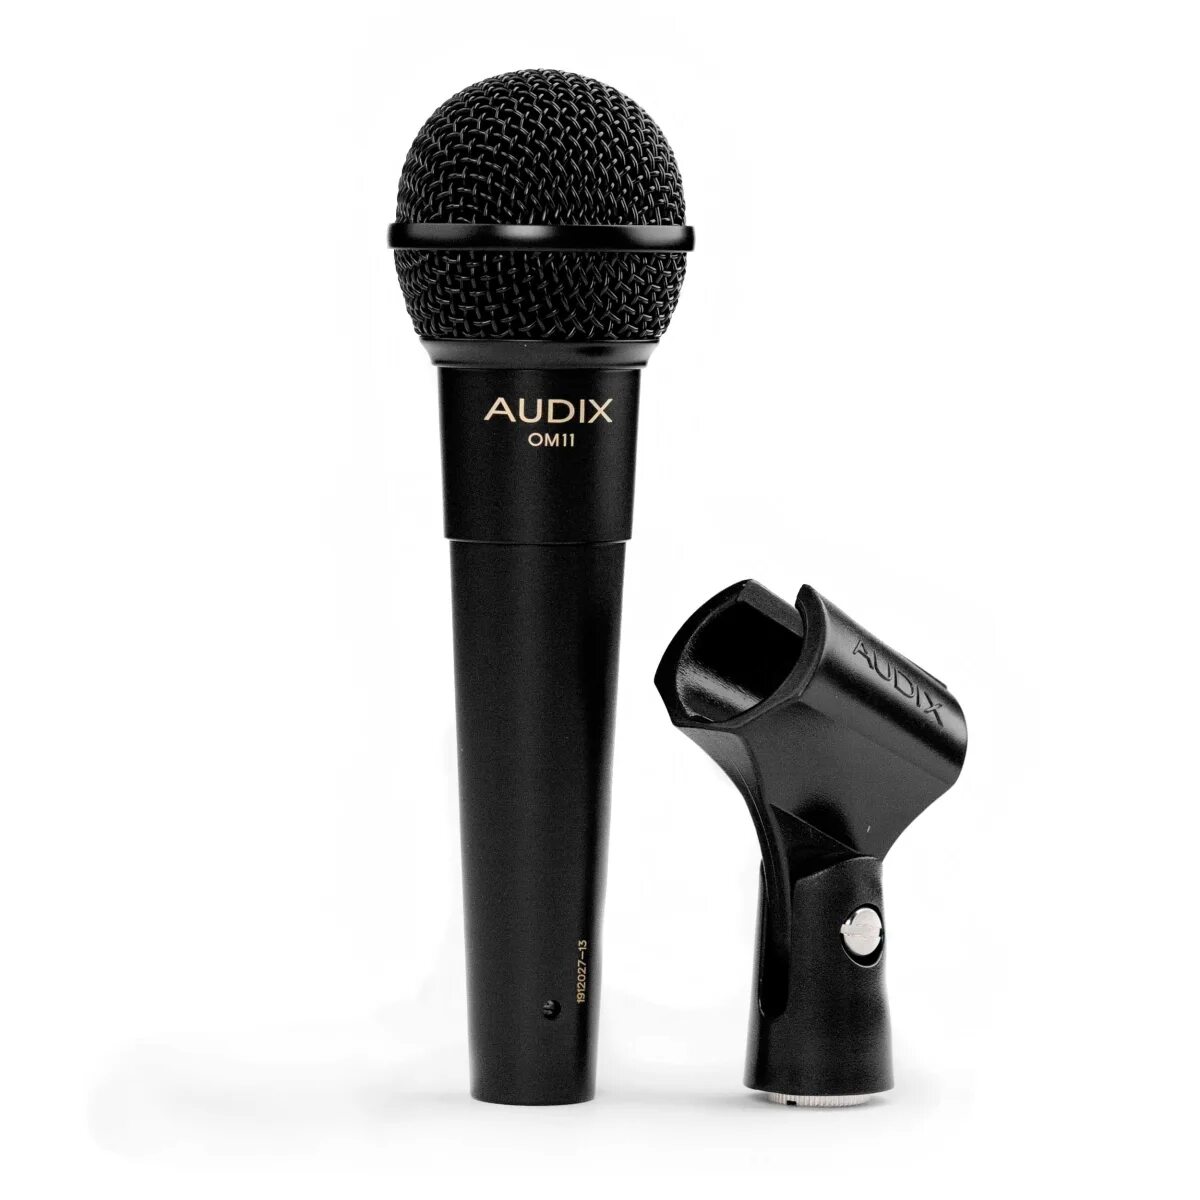 Микрофон Audix om7. Audix om2 динамический микрофон. Вокальный микрофон Audix f50. Шнуровой микрофон Audix om2s. Профессиональный микрофон цена